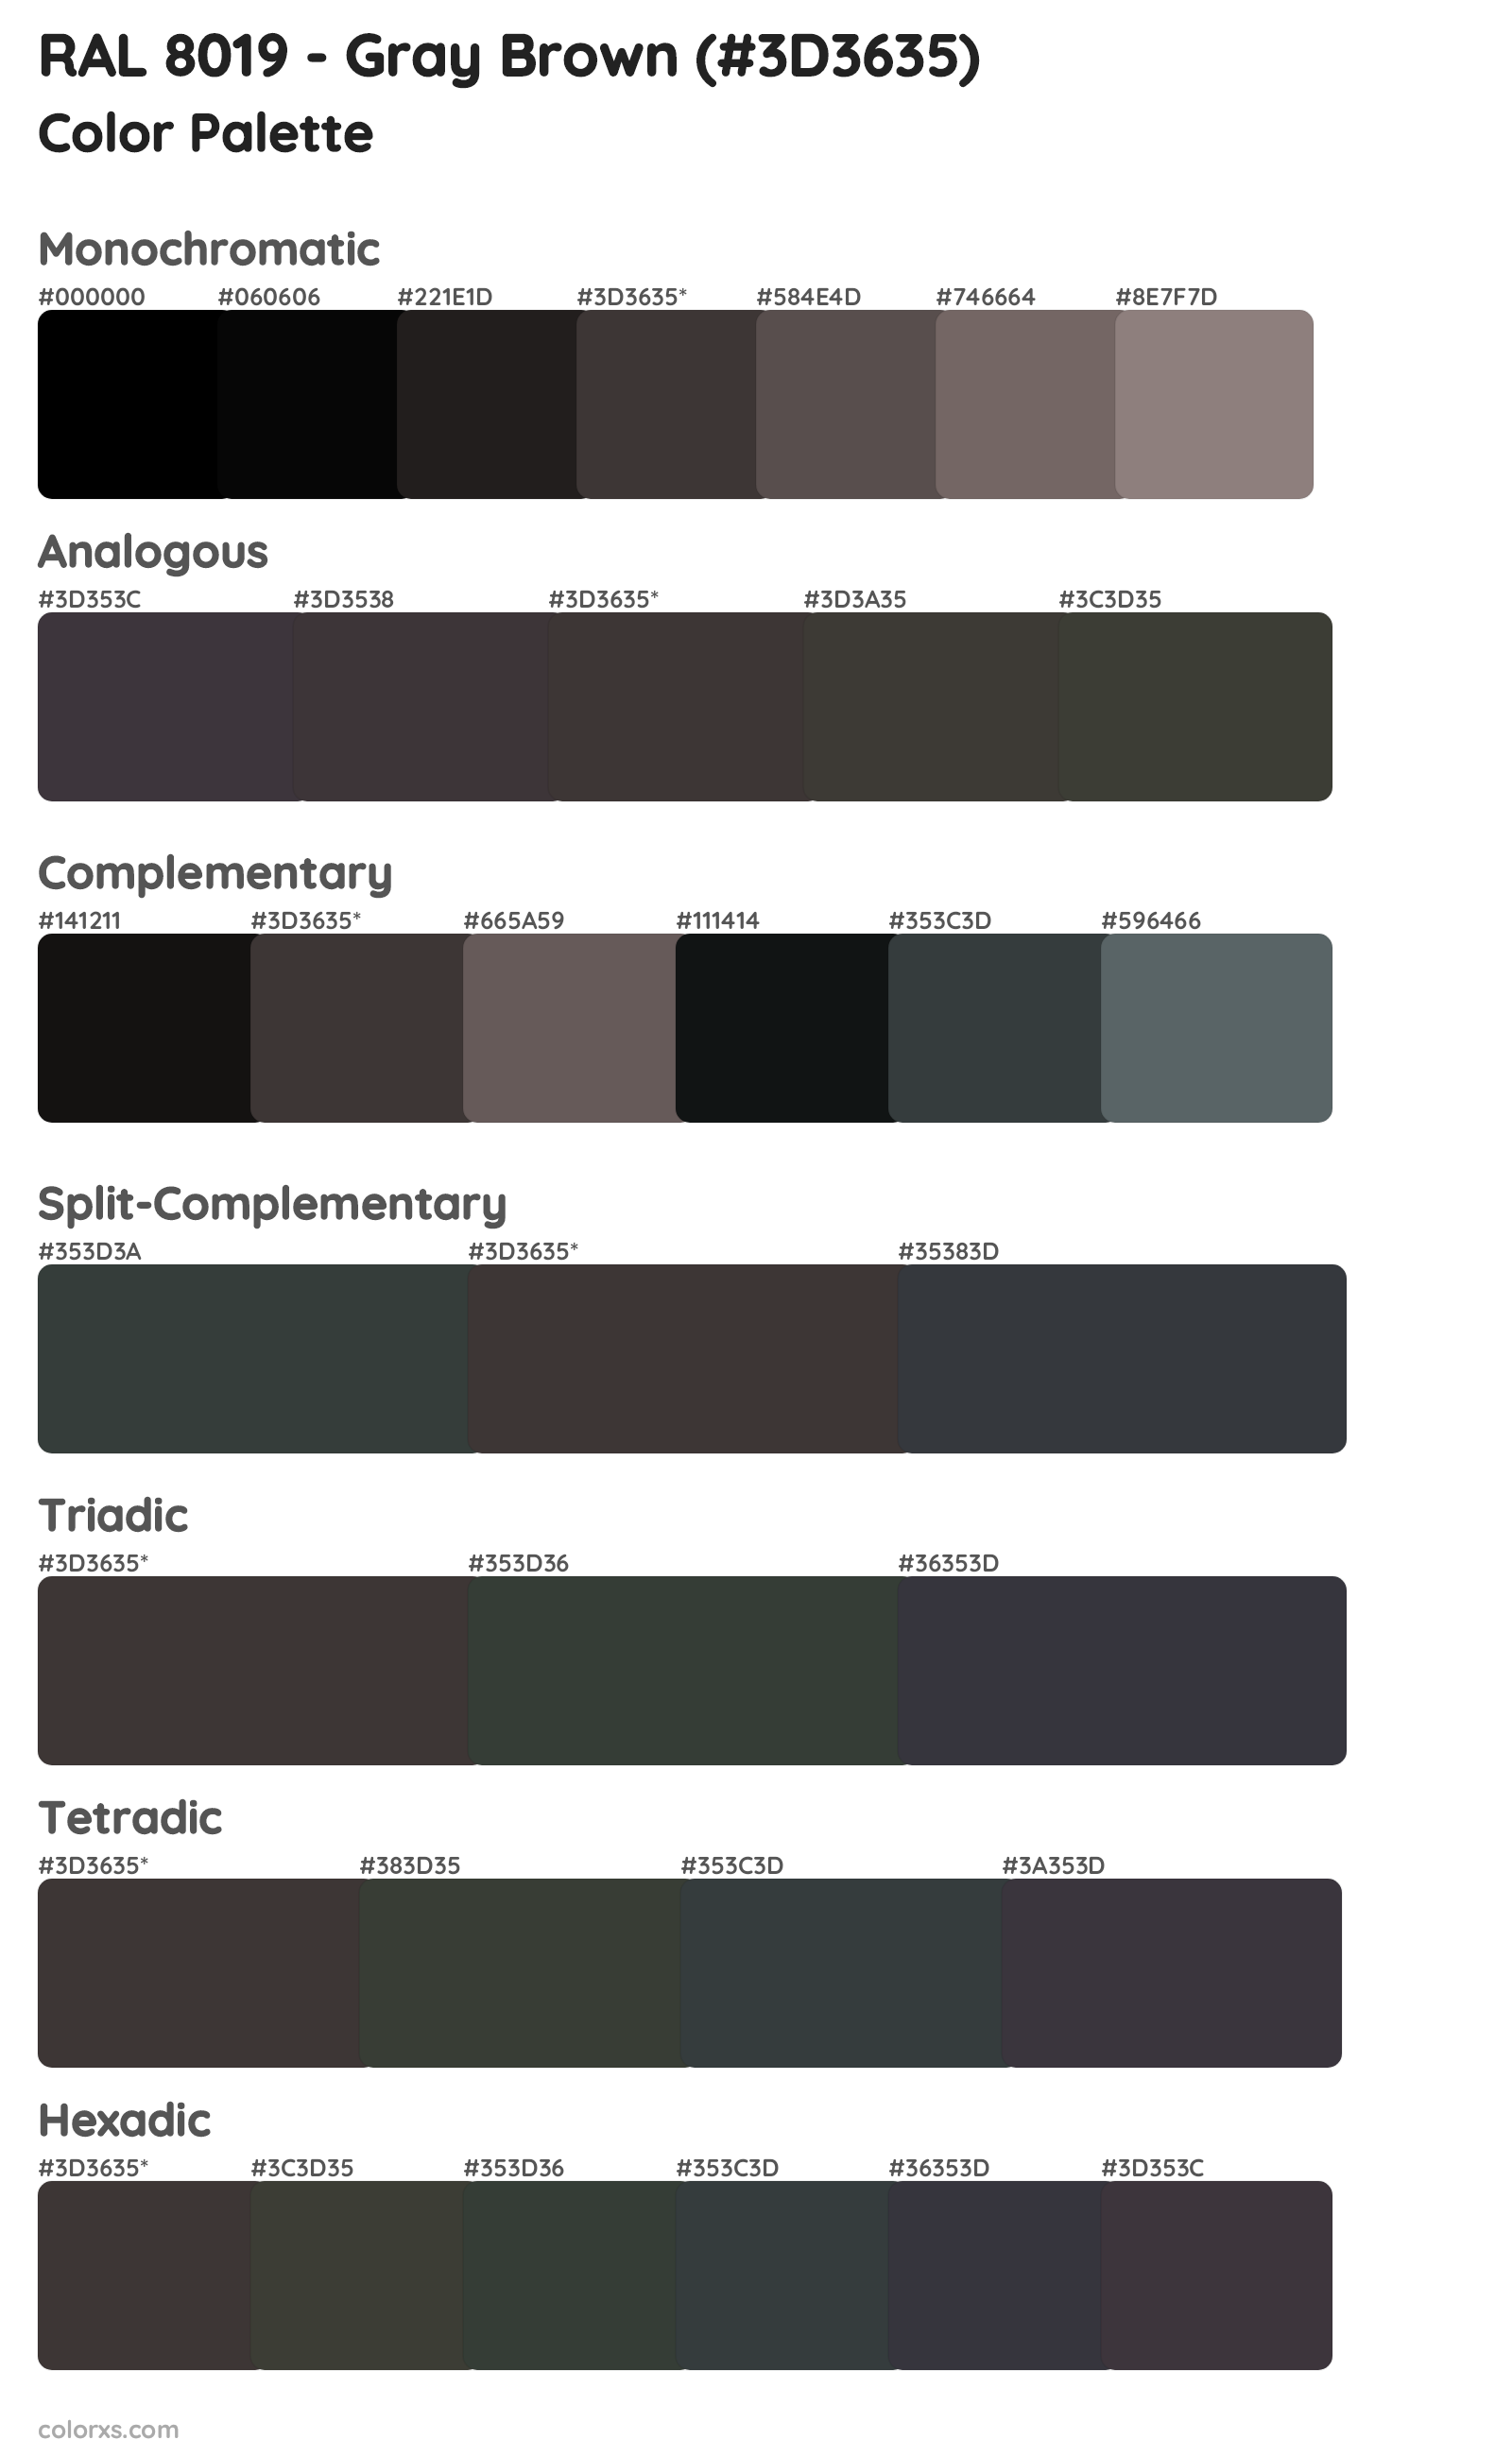 RAL 8019 - Gray Brown Color Scheme Palettes